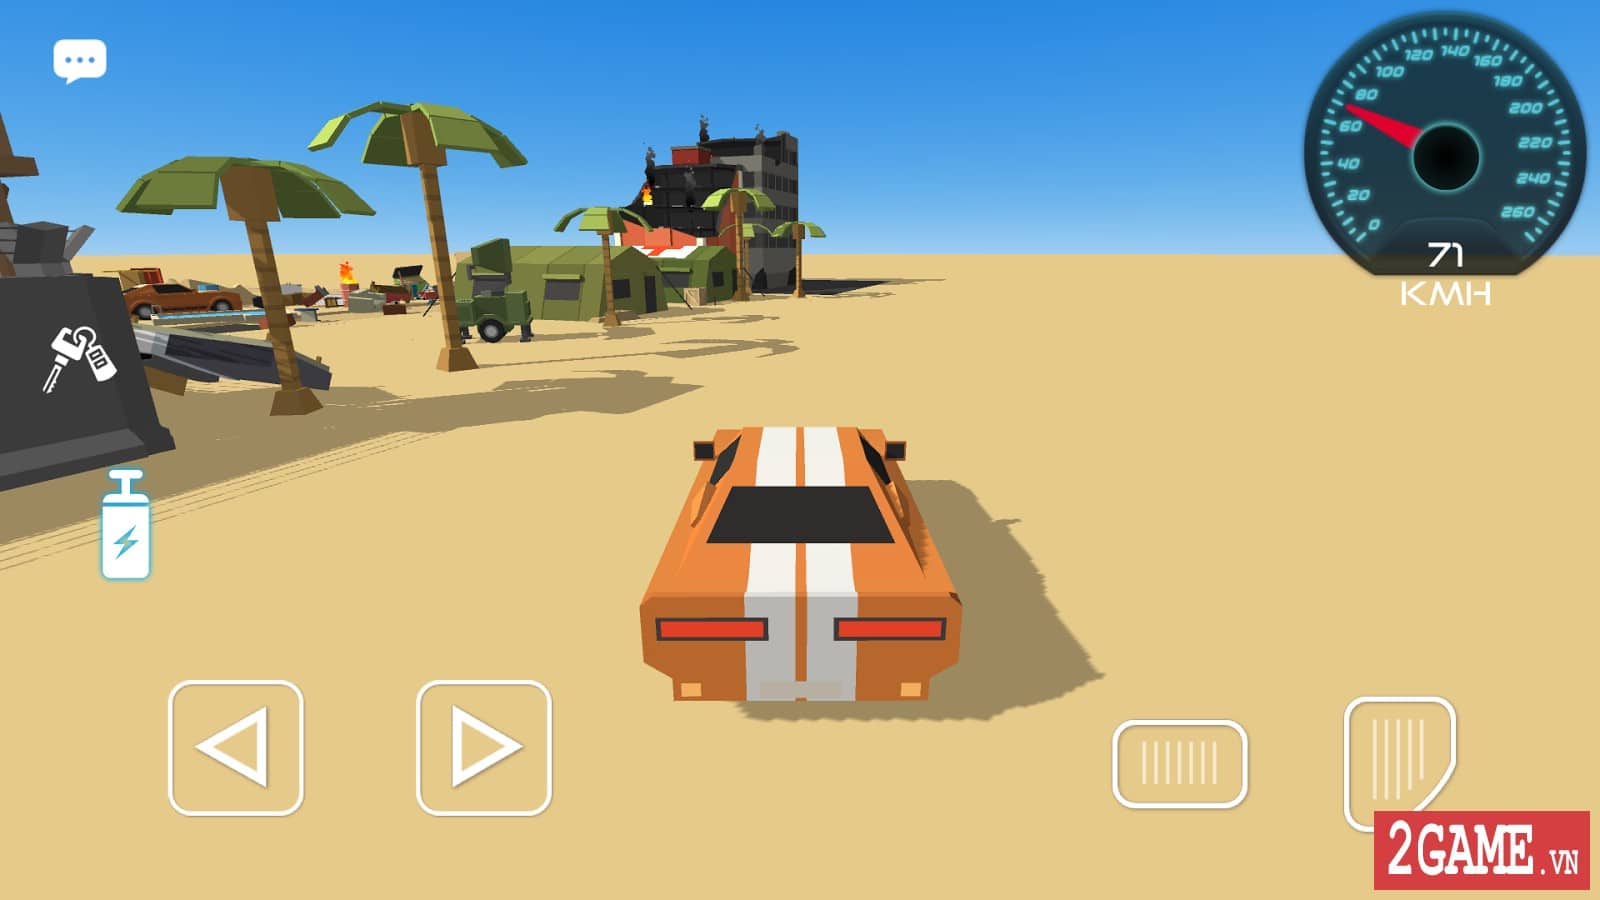 2game-Simple-Sandbox-mobile-6.jpg (1600×900)